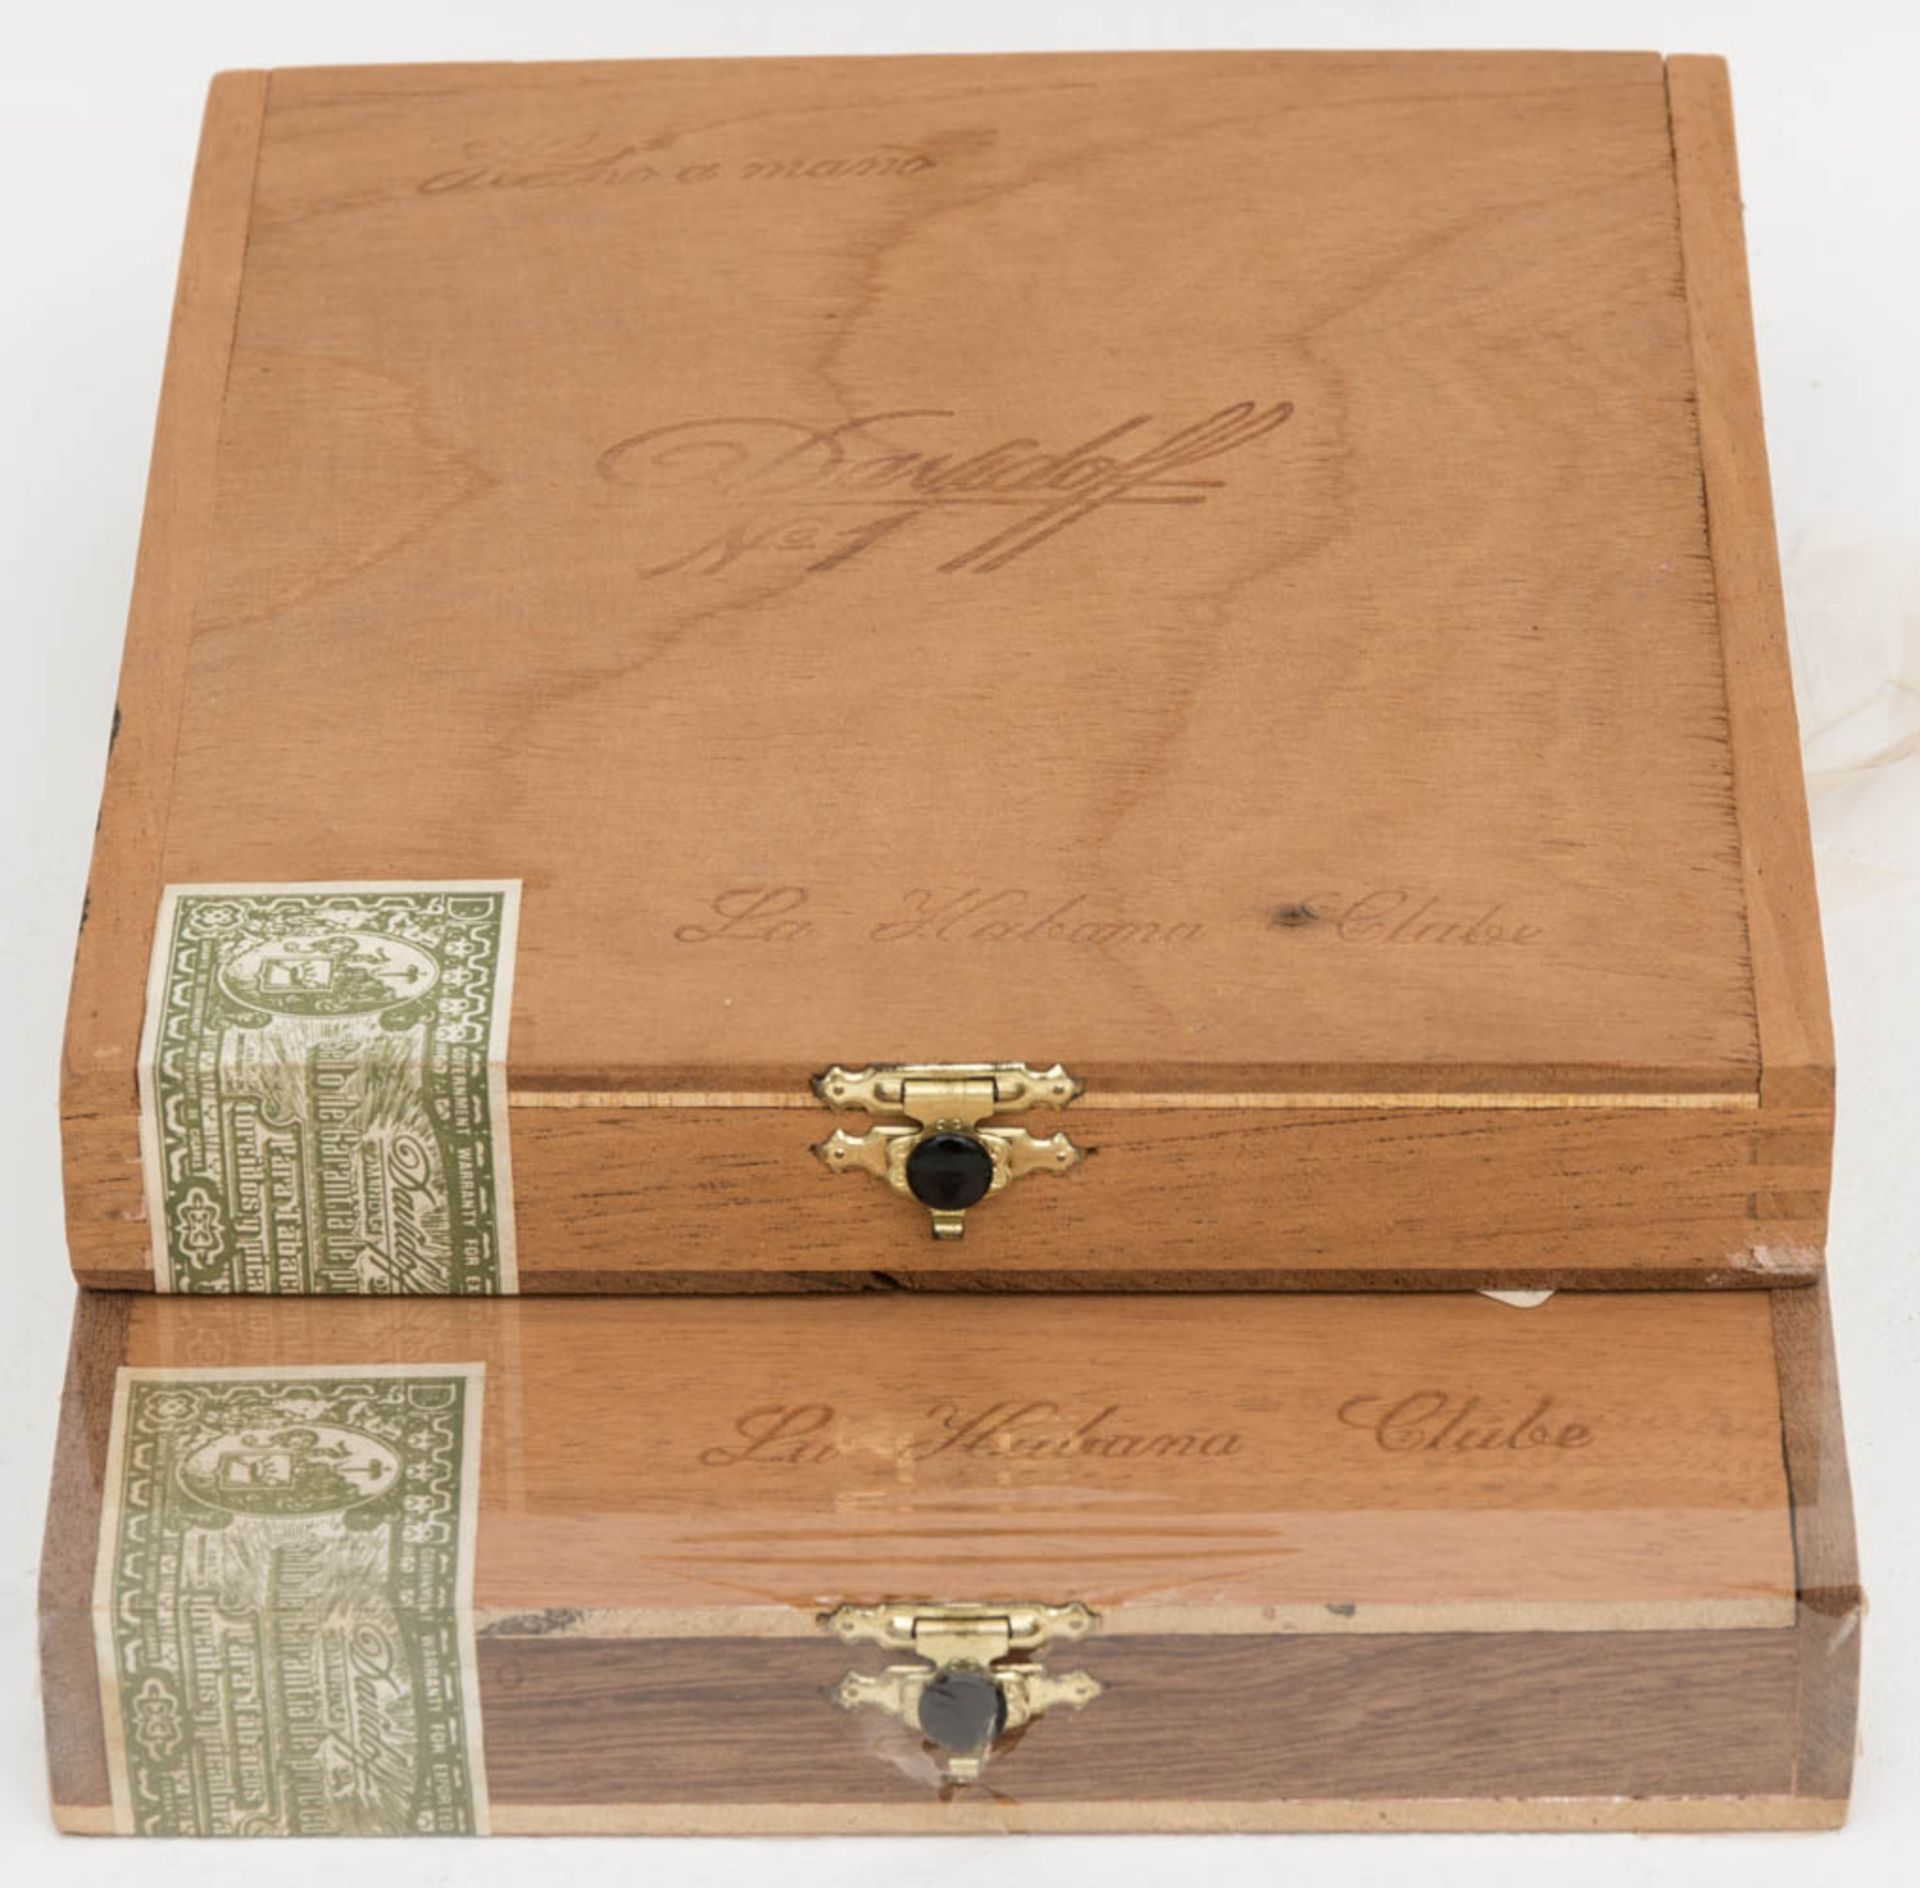 Zwei Davidoff Zigarren, Nr. 1 aus Kuba, originalverpackt.Ungeöffnete Zigarren, versie